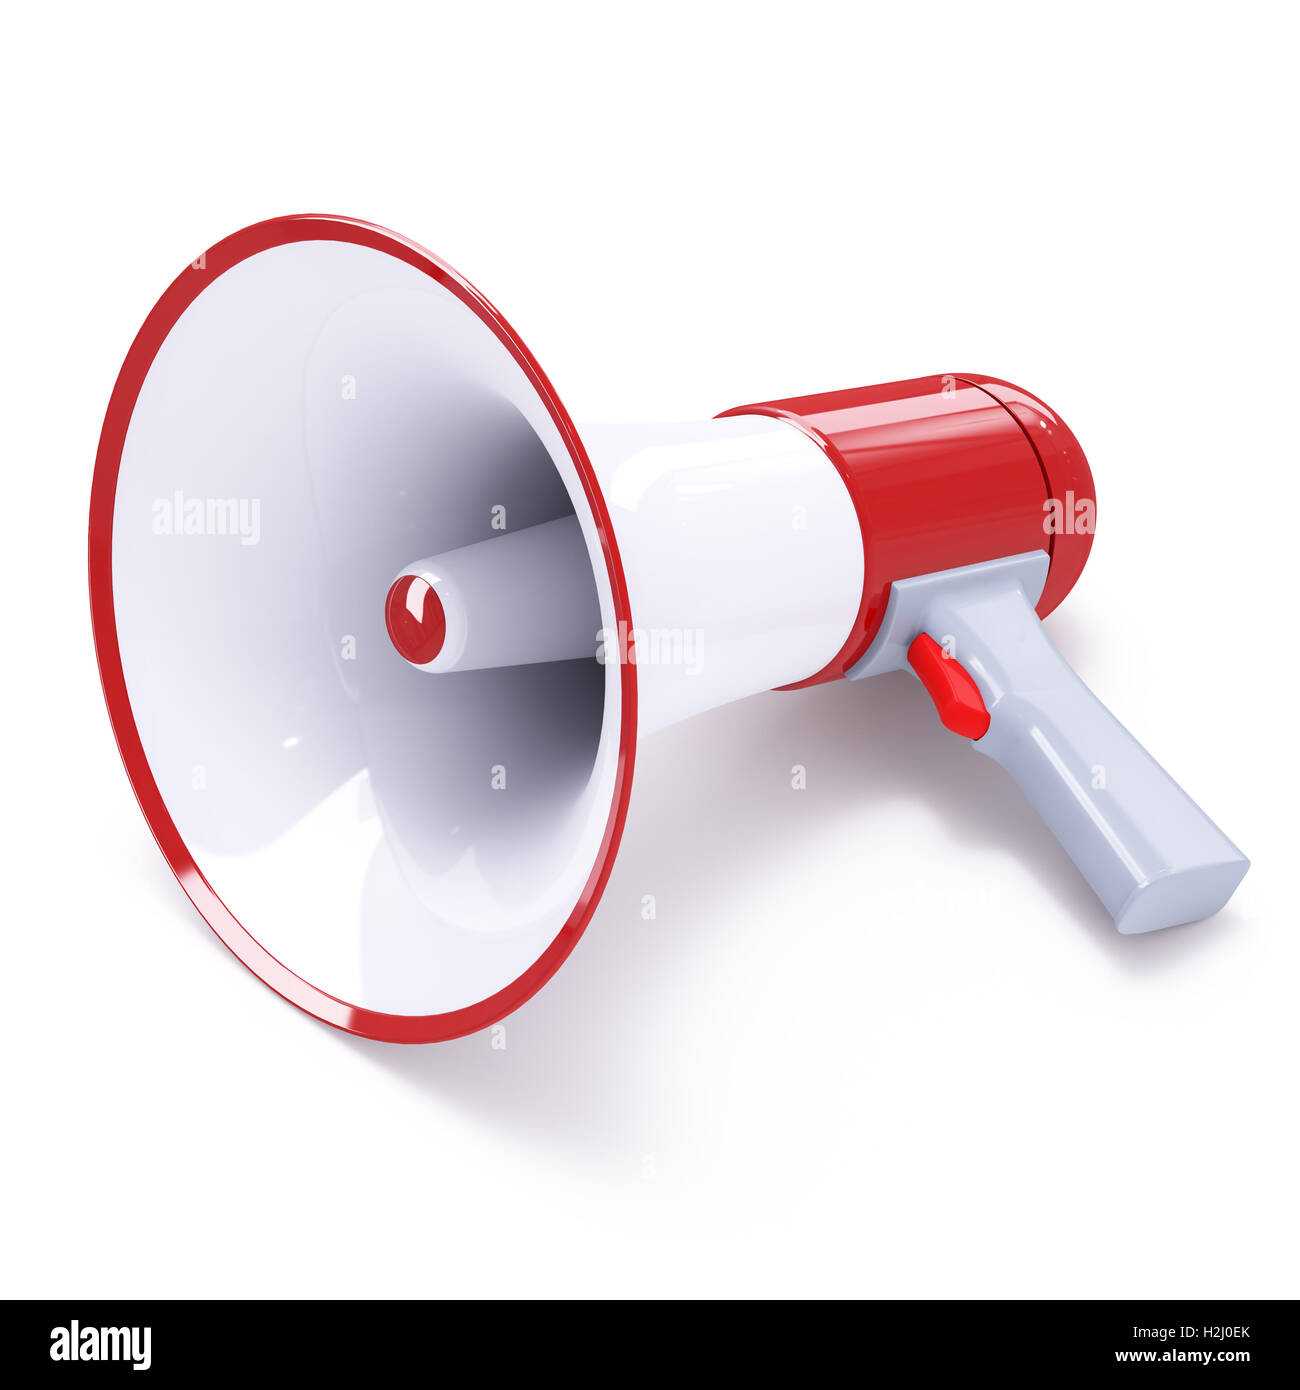 https://c8.alamy.com/comp/H2J0EK/red-megaphone-with-red-button-H2J0EK.jpg